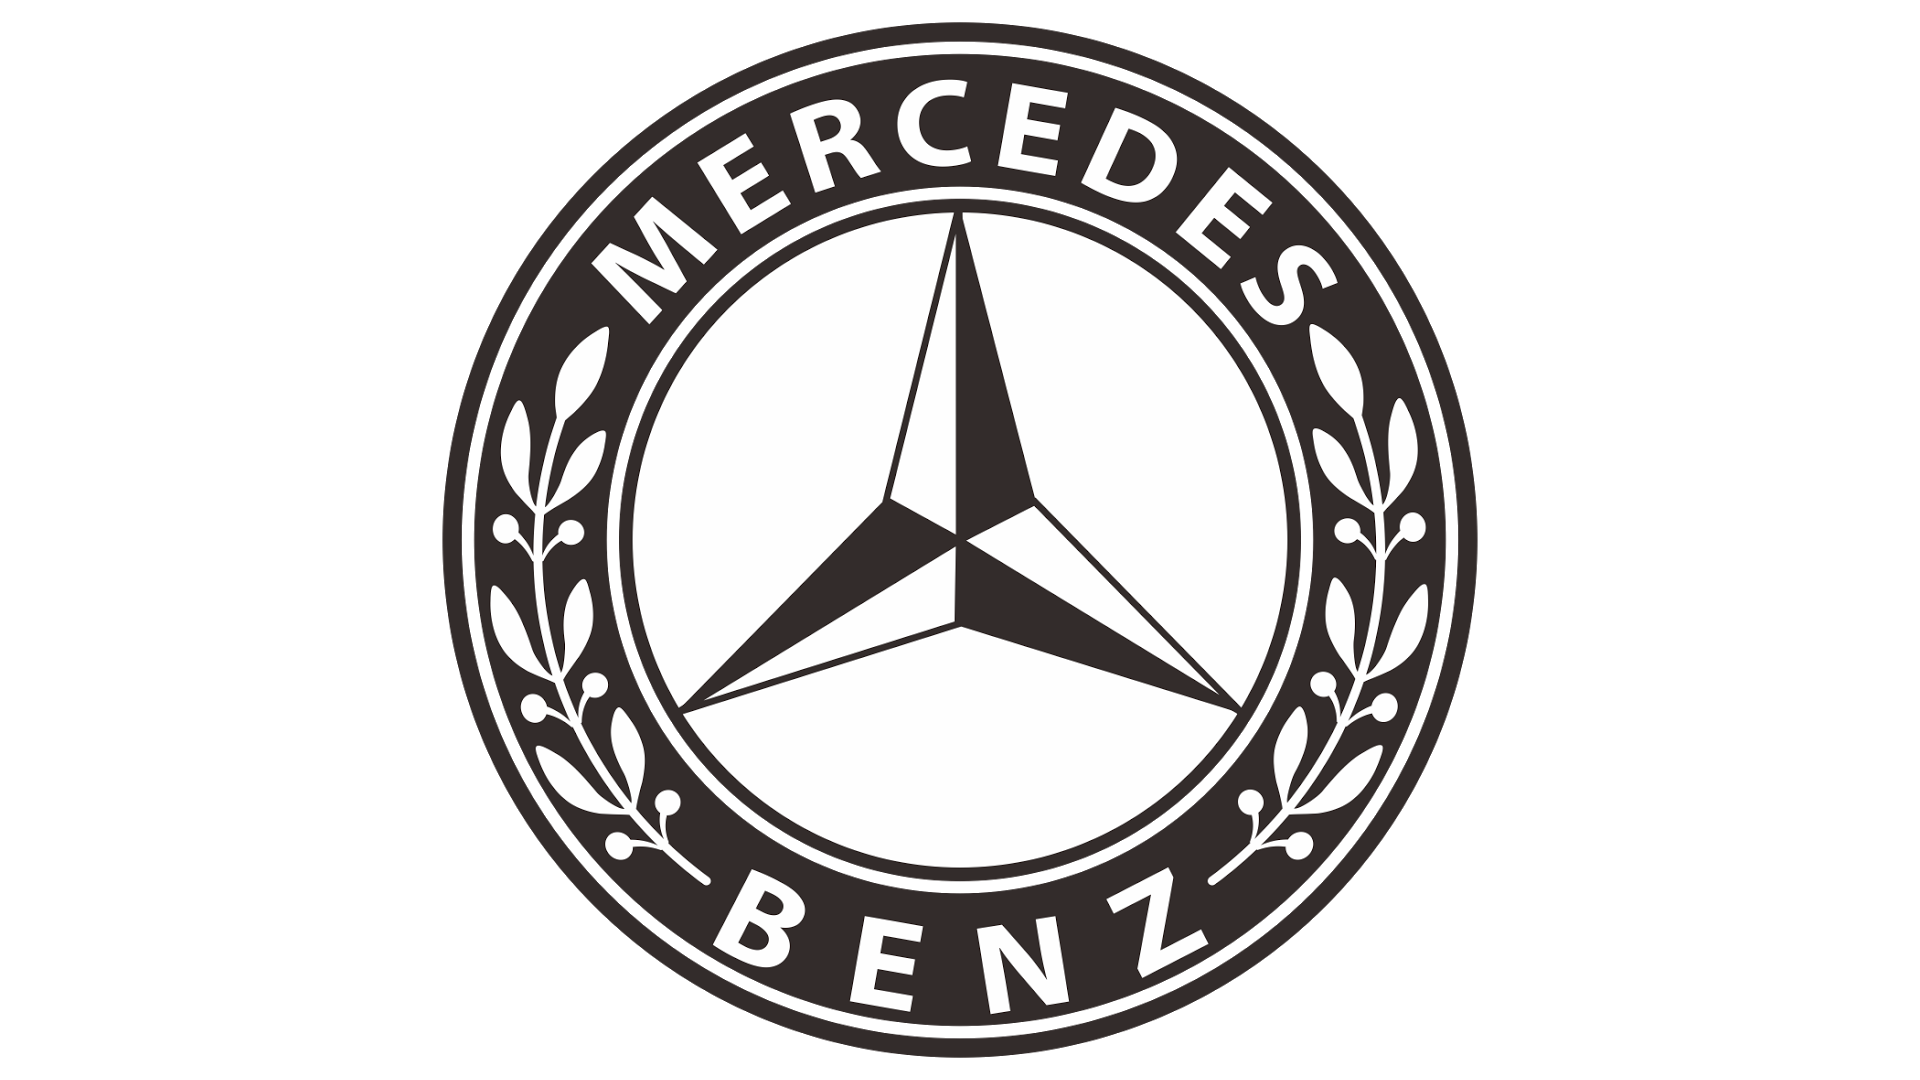 Logotipo da Mercedes